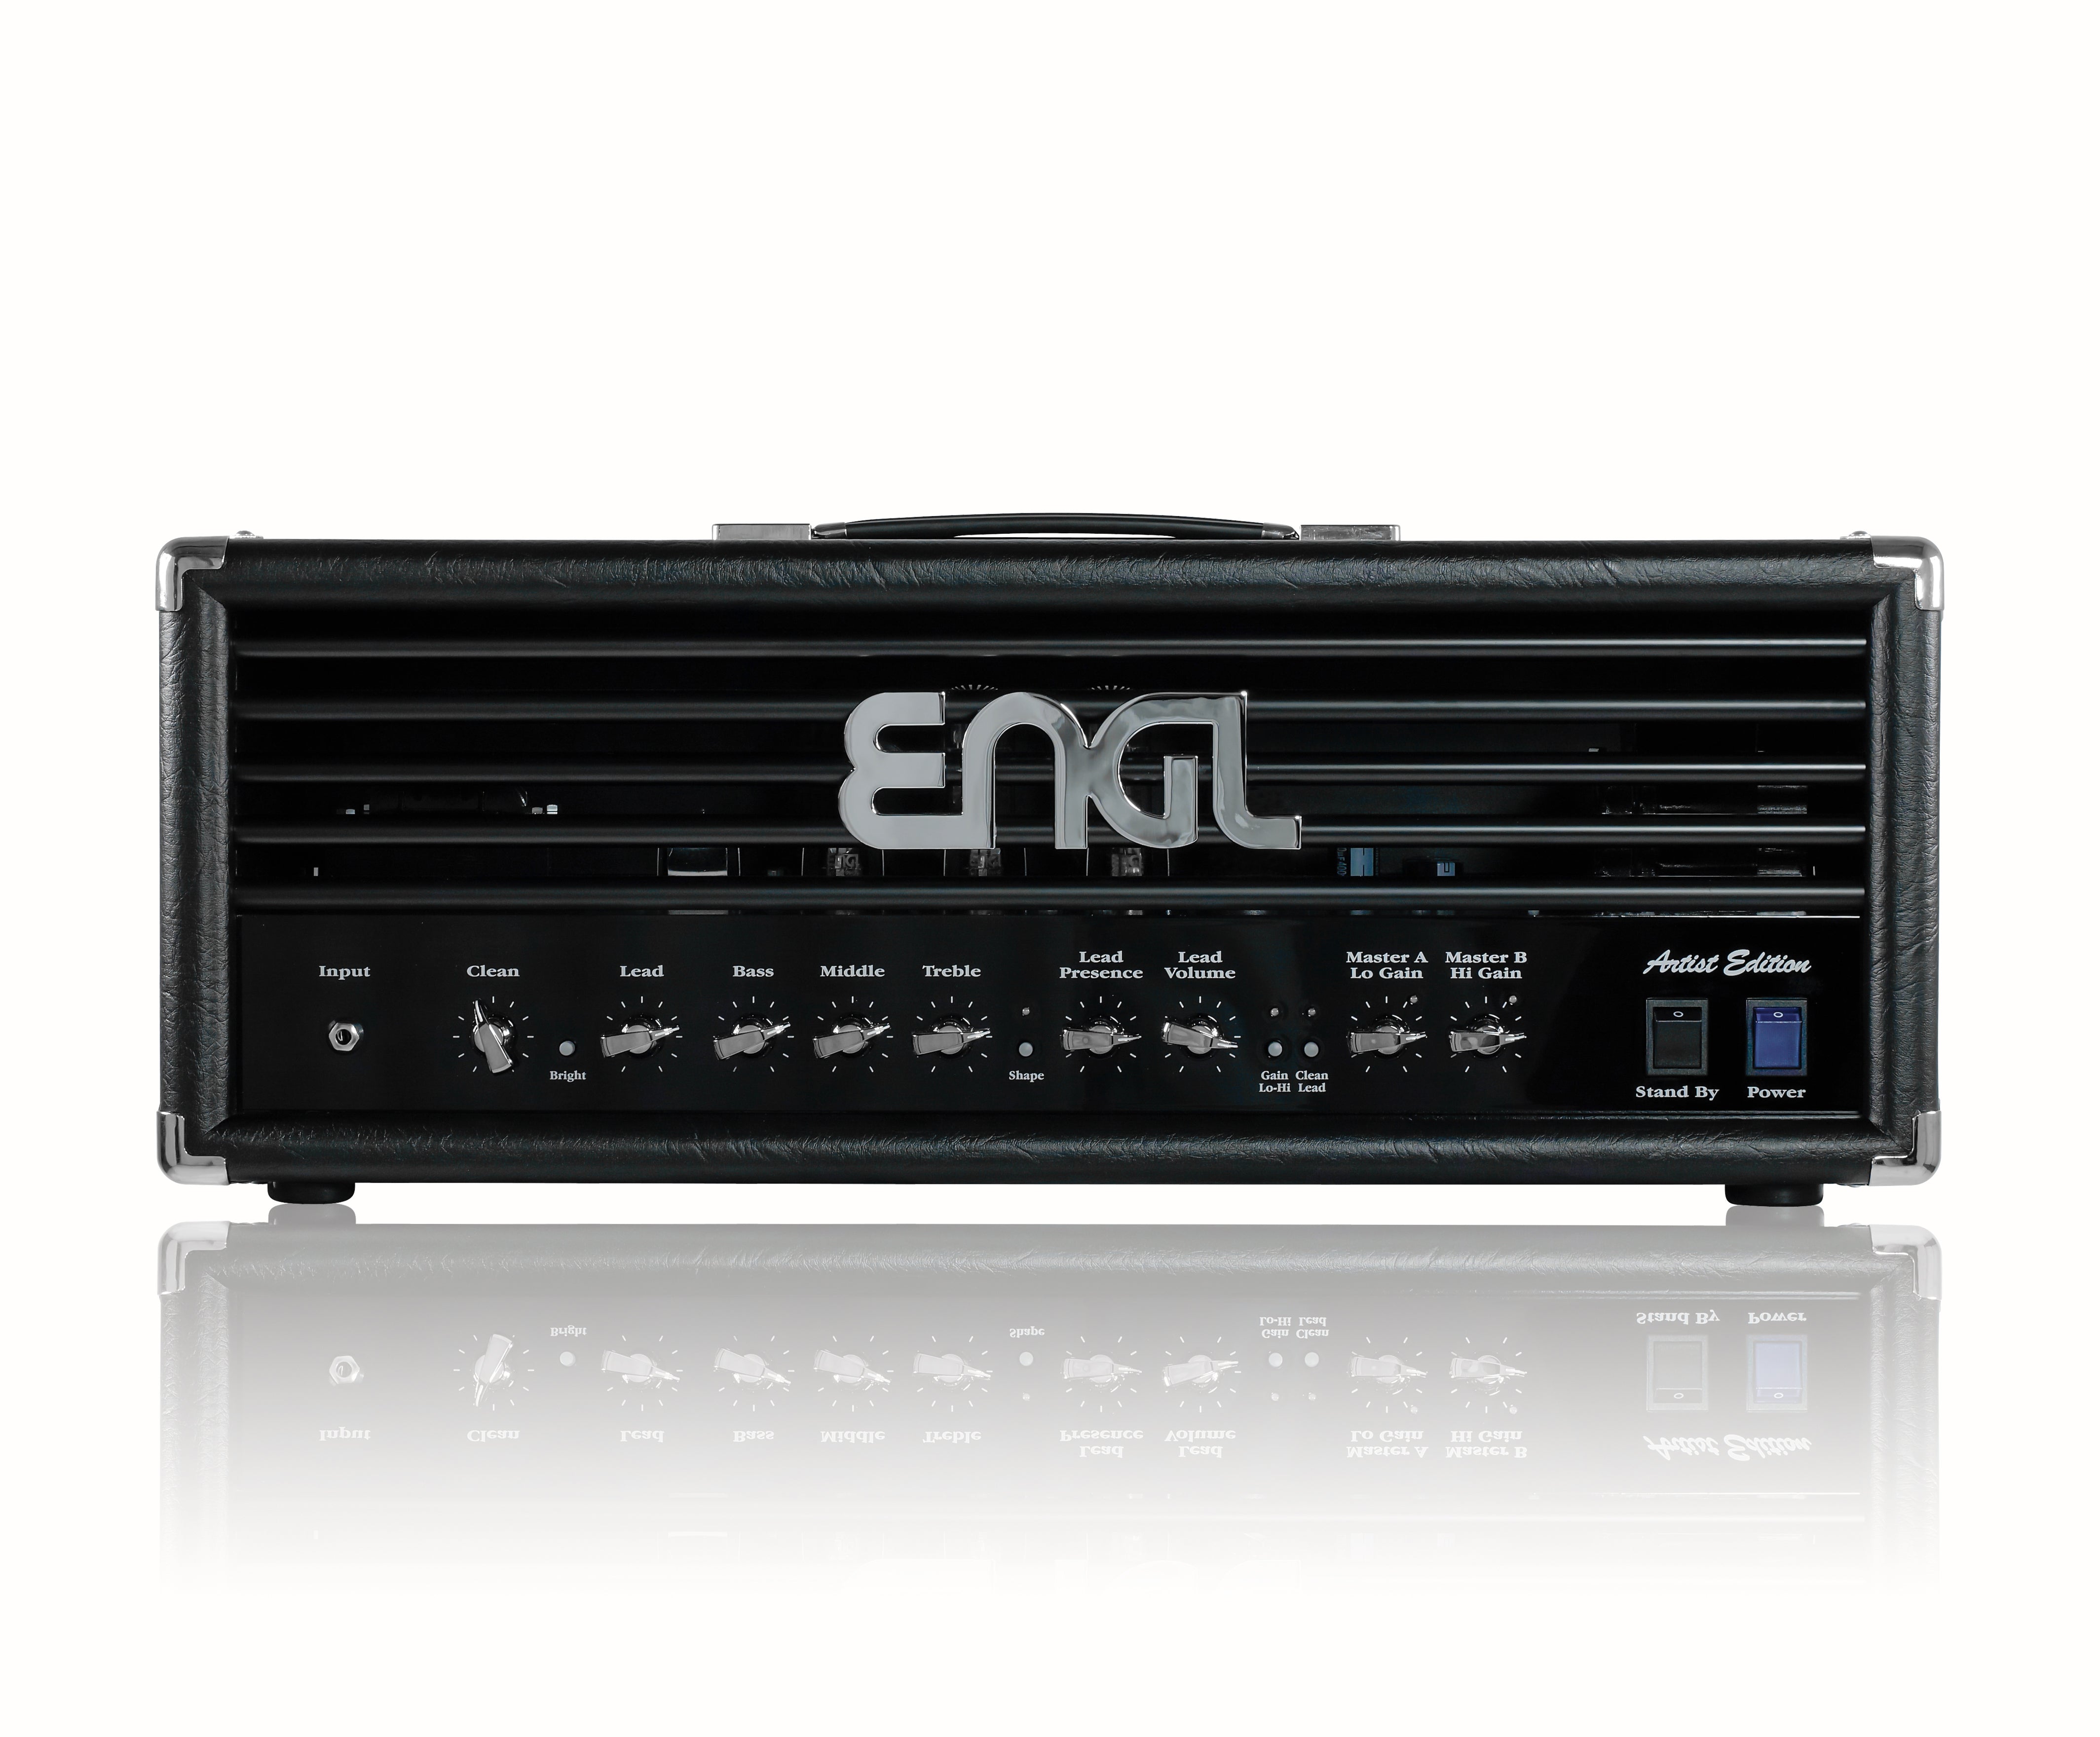 ENGL ARTITST EDITION 50 E653 HEAD - HIENDGUITAR   ENGL amp